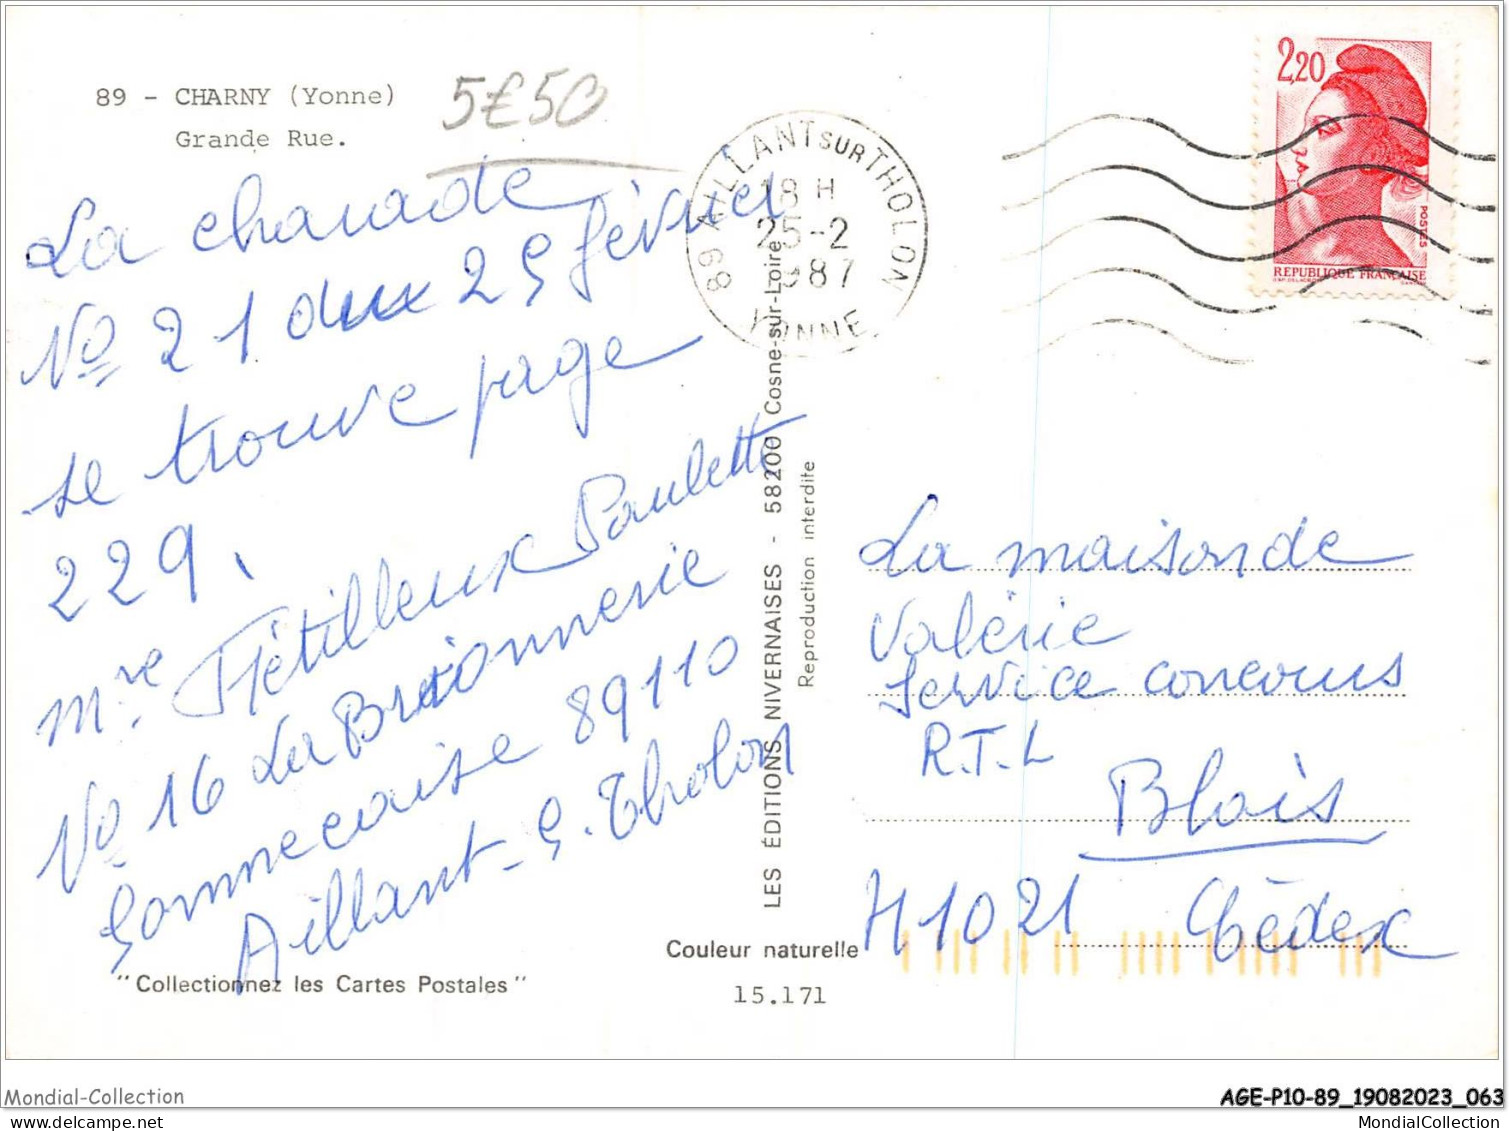 AGEP10-89-0913 - CHARNY - Yonne - Grande Rue - Charny